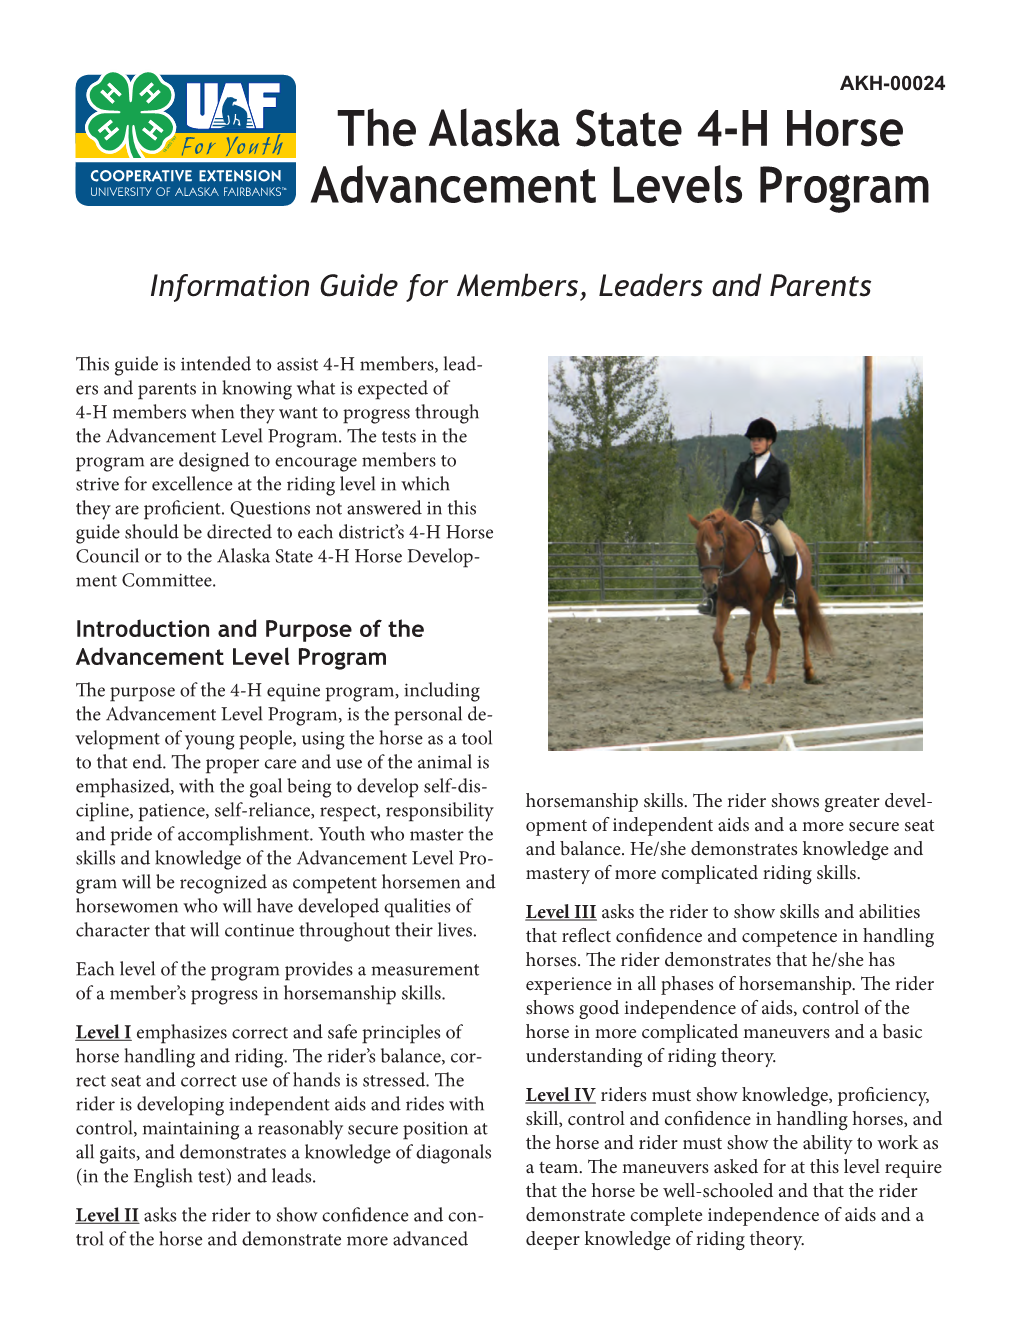 The Alaska State 4-H Horse Advancement Levels Program